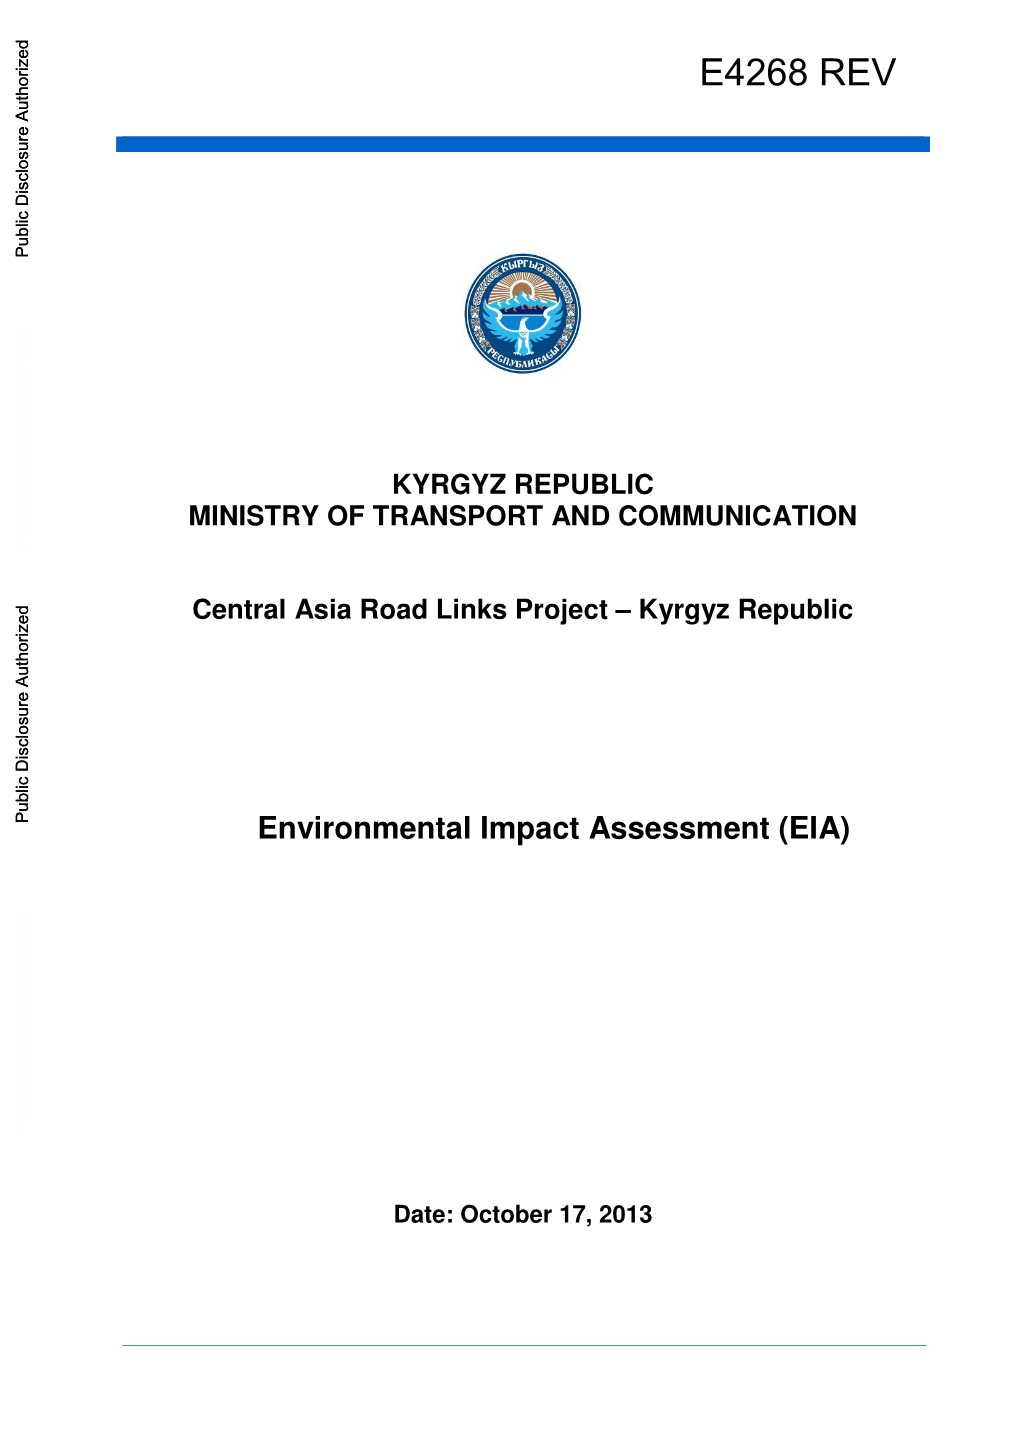 Kyrgyz Republic Environmental Impact